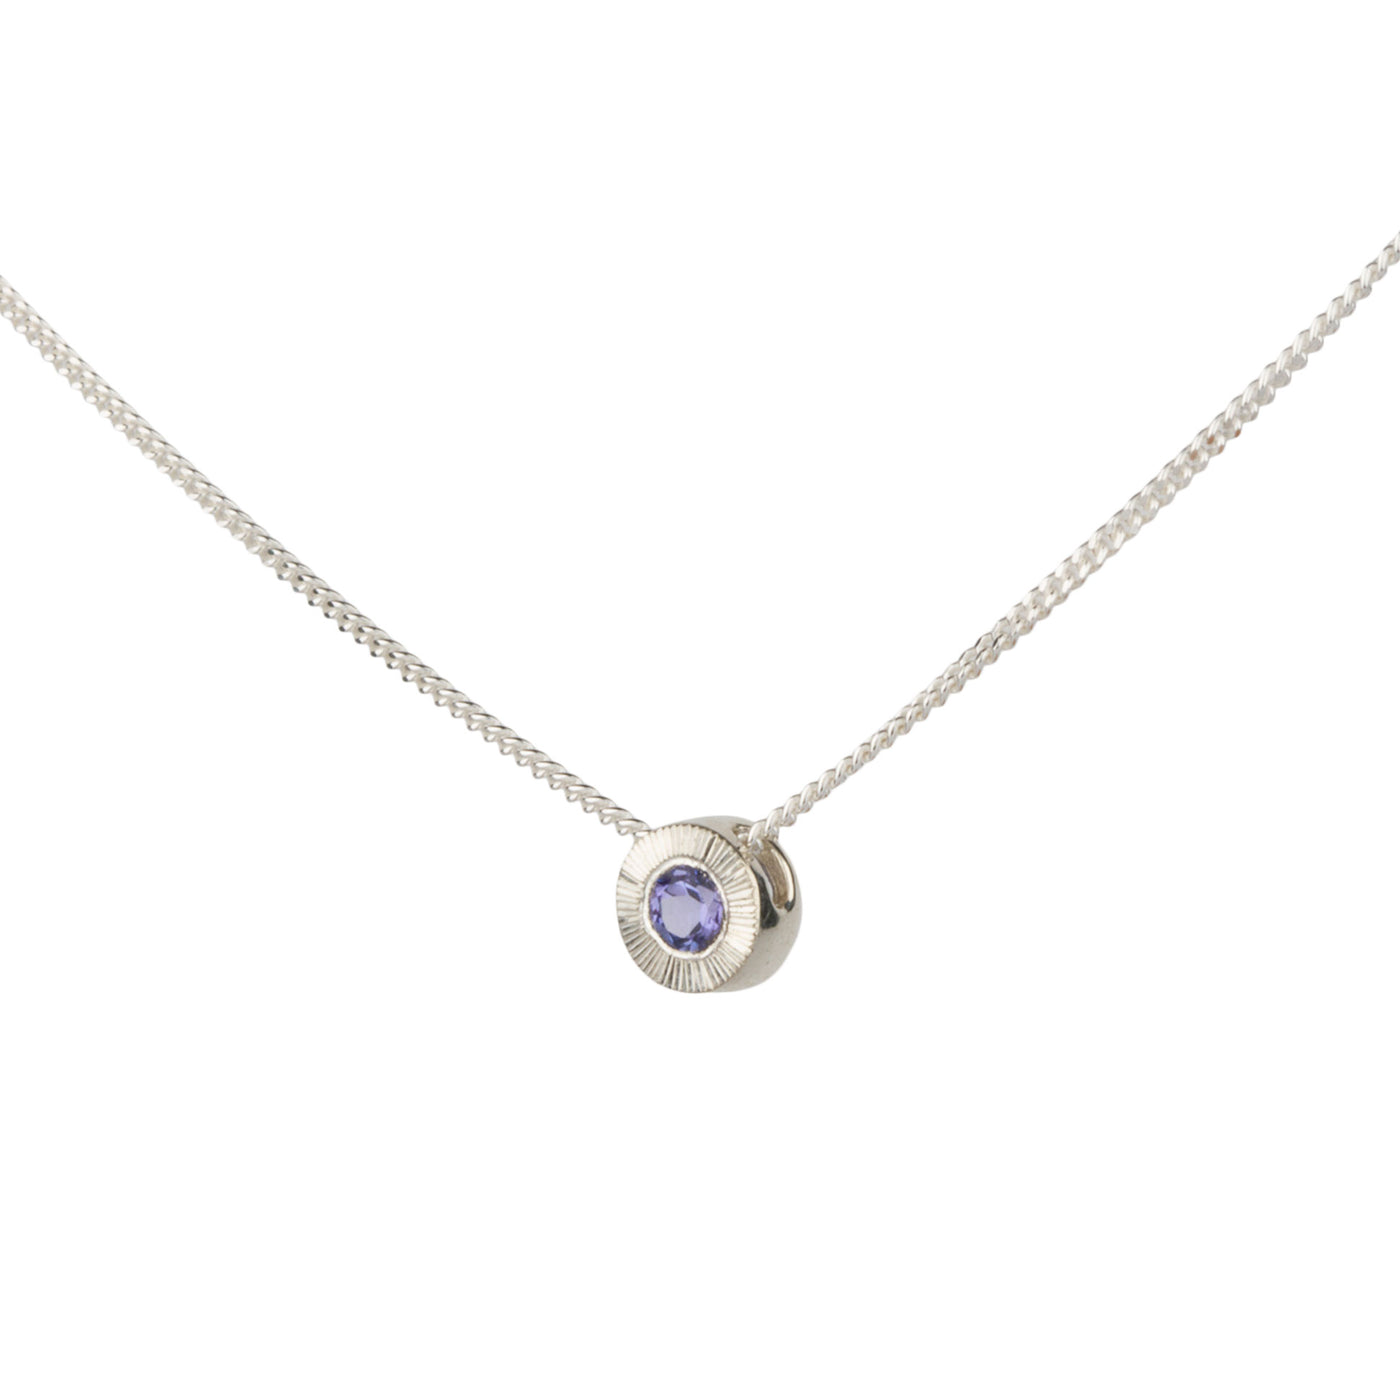 December birthstone Aurora necklace with tanzanite in sterling silver